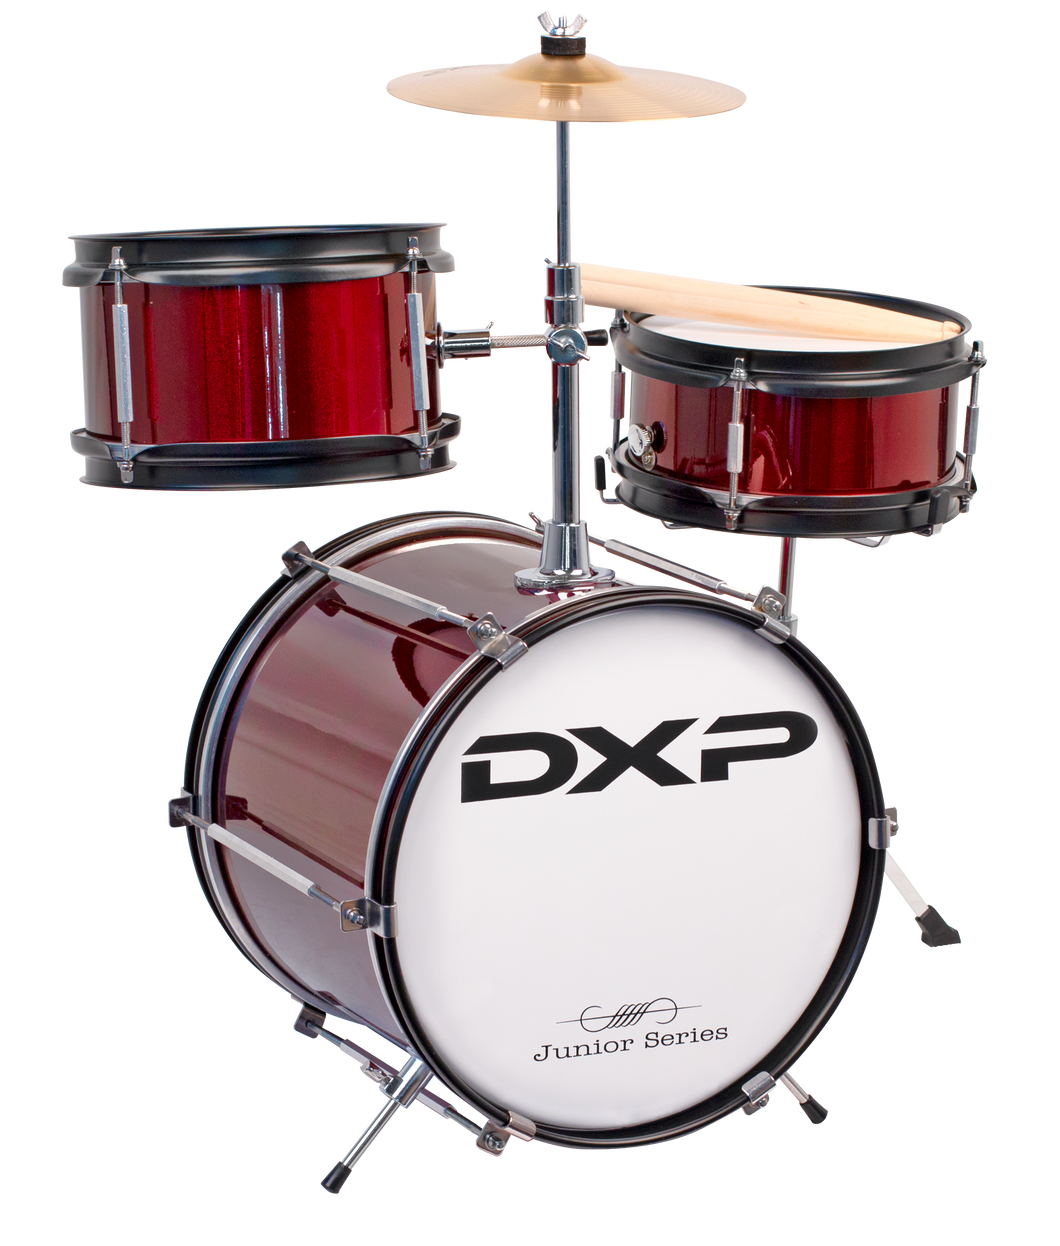 DXP 3 Piece Junior Drum Kit Package  Wine Red